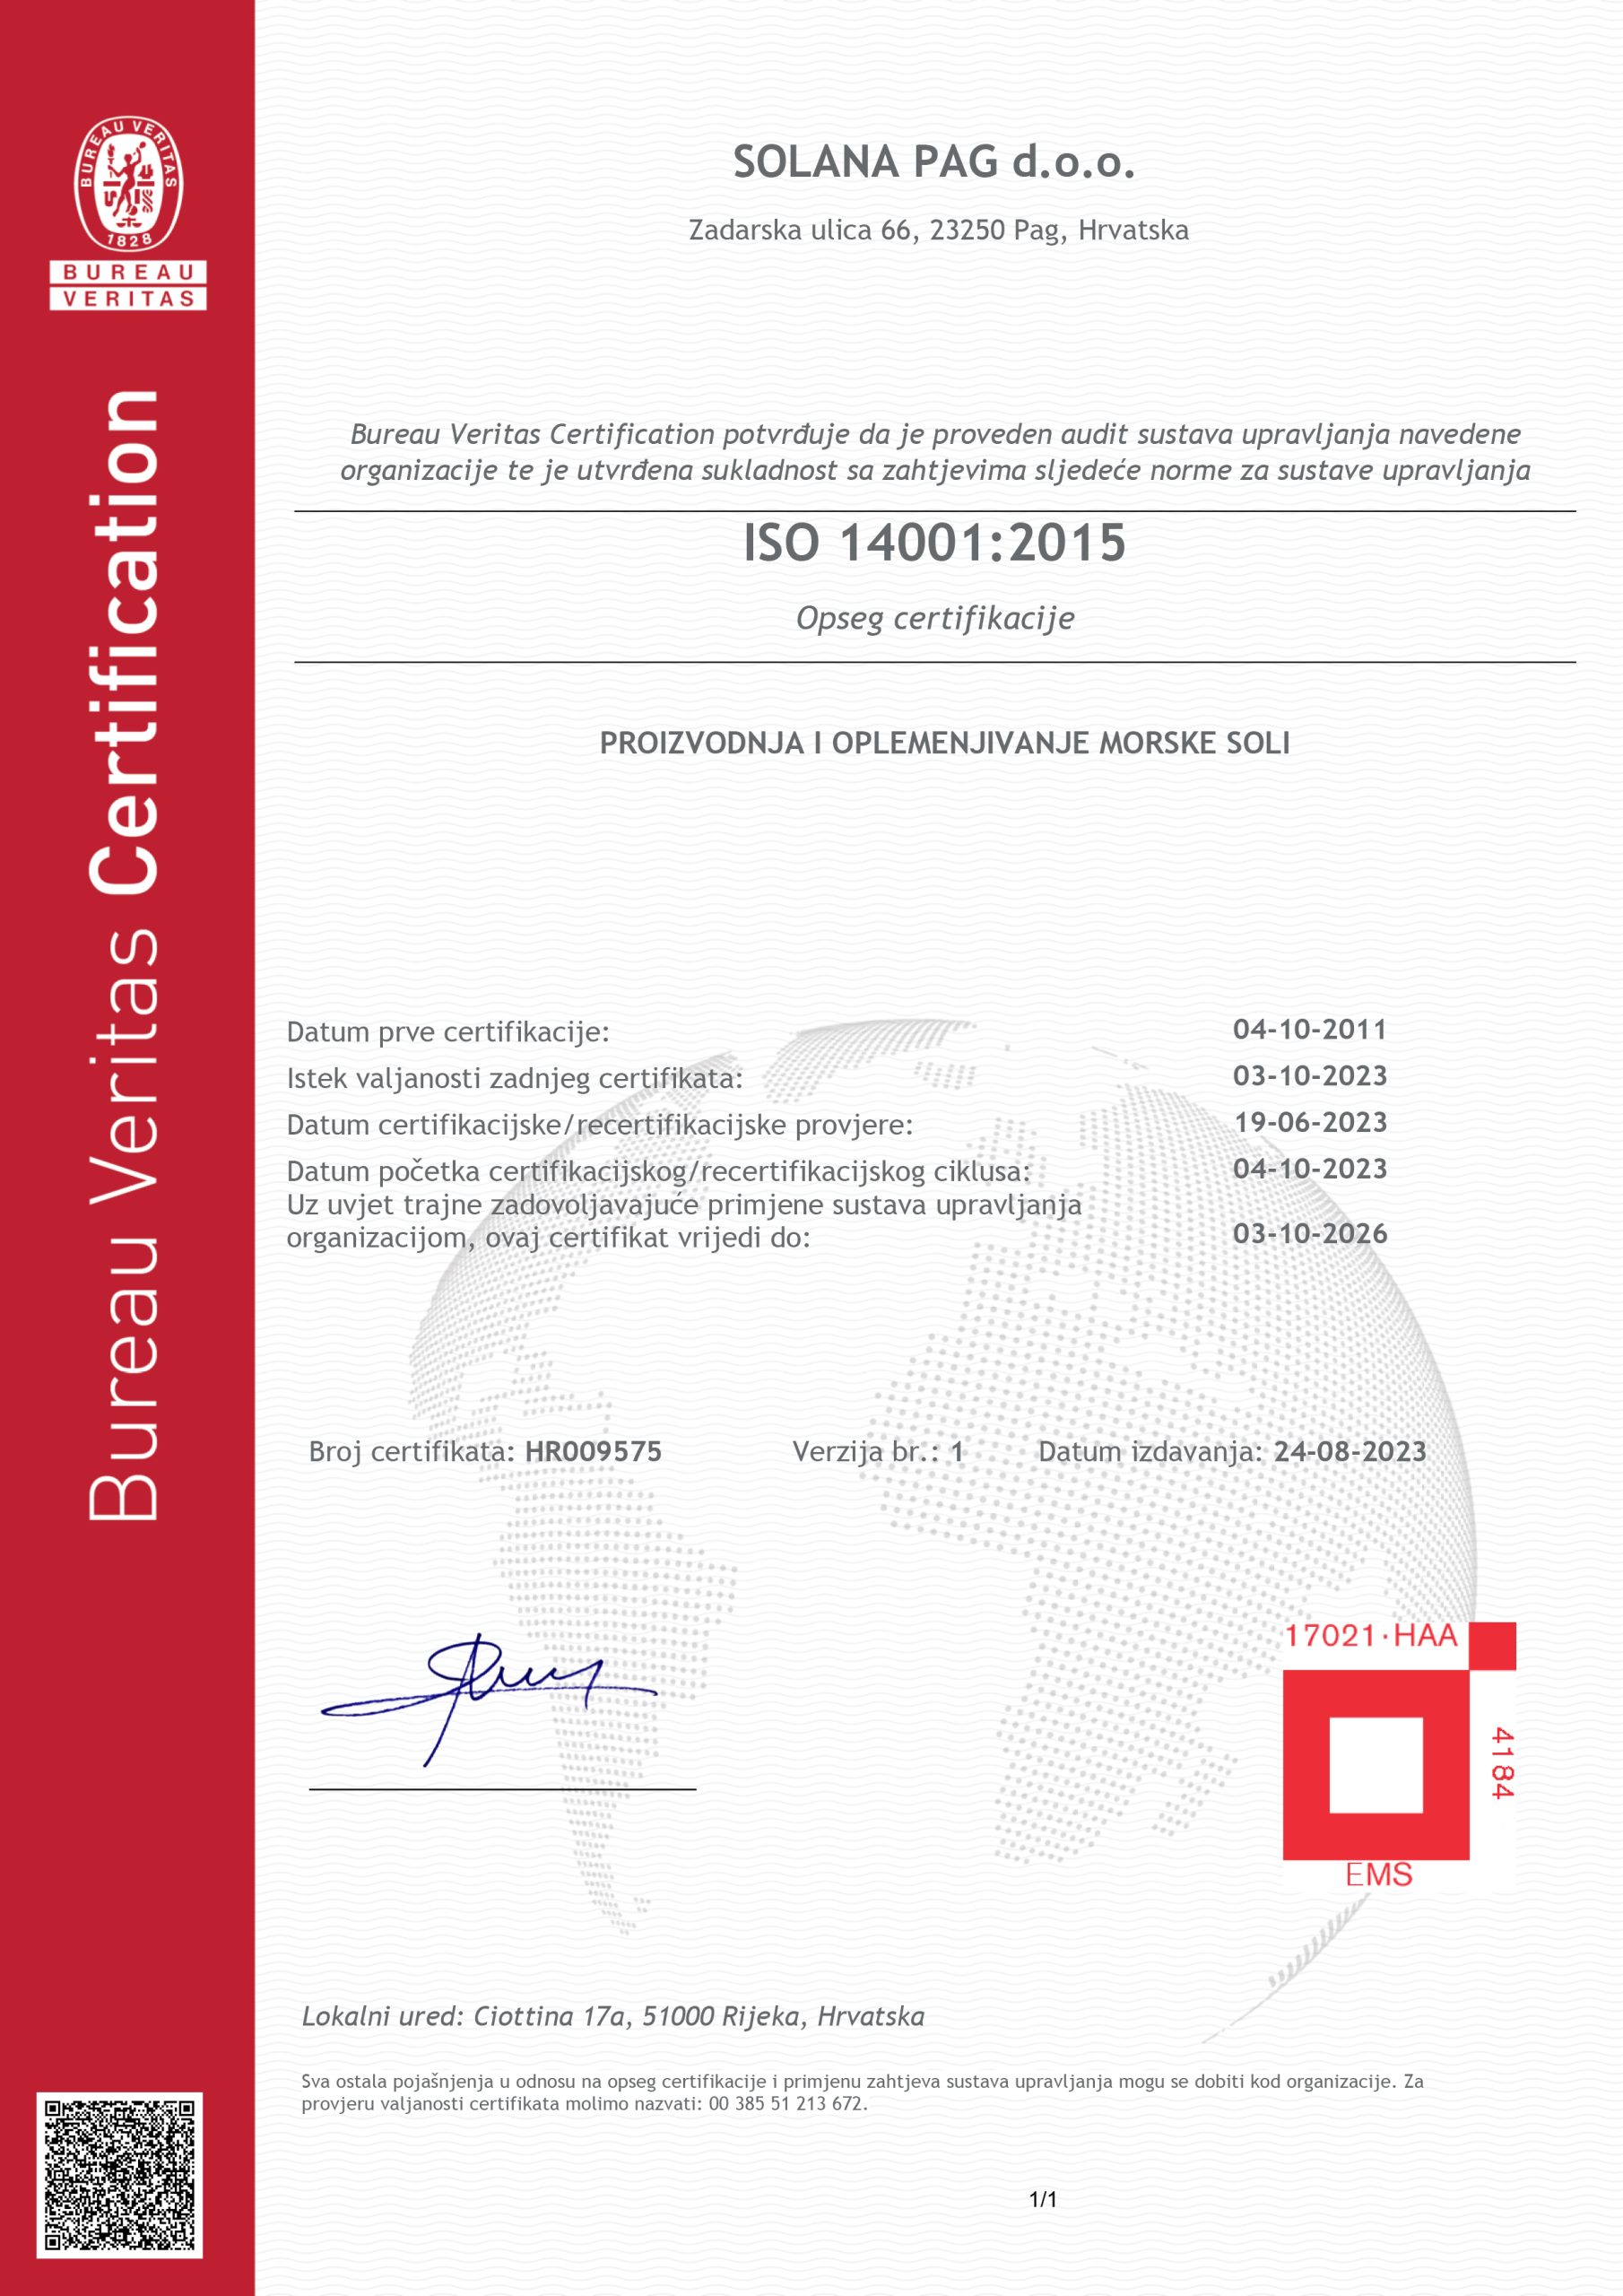 ISO 14001Certificate for Solana Pag d.d. 2023-2026 hrv